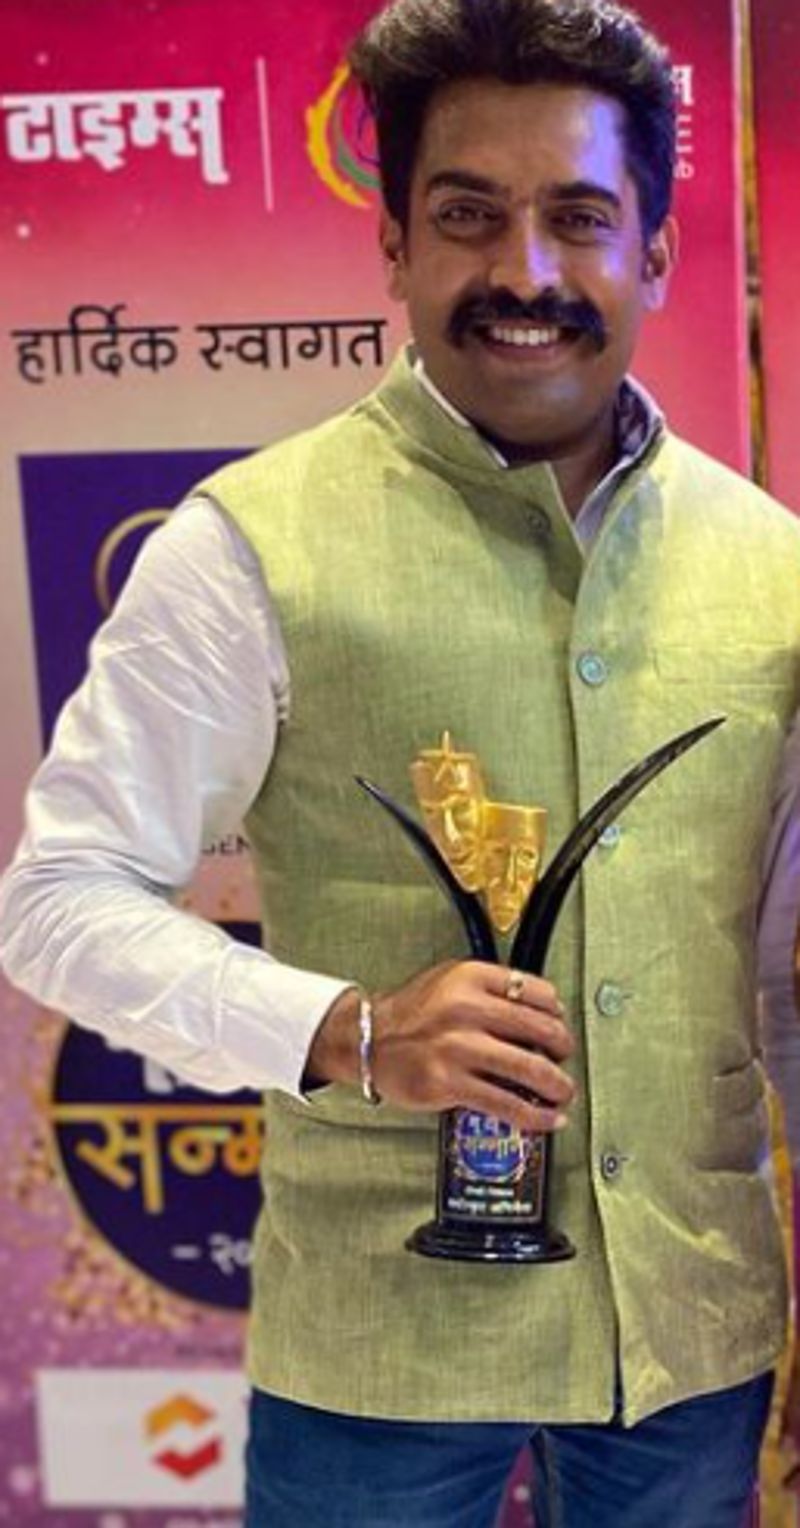 Harish Dudhade with the M. Ta honors award